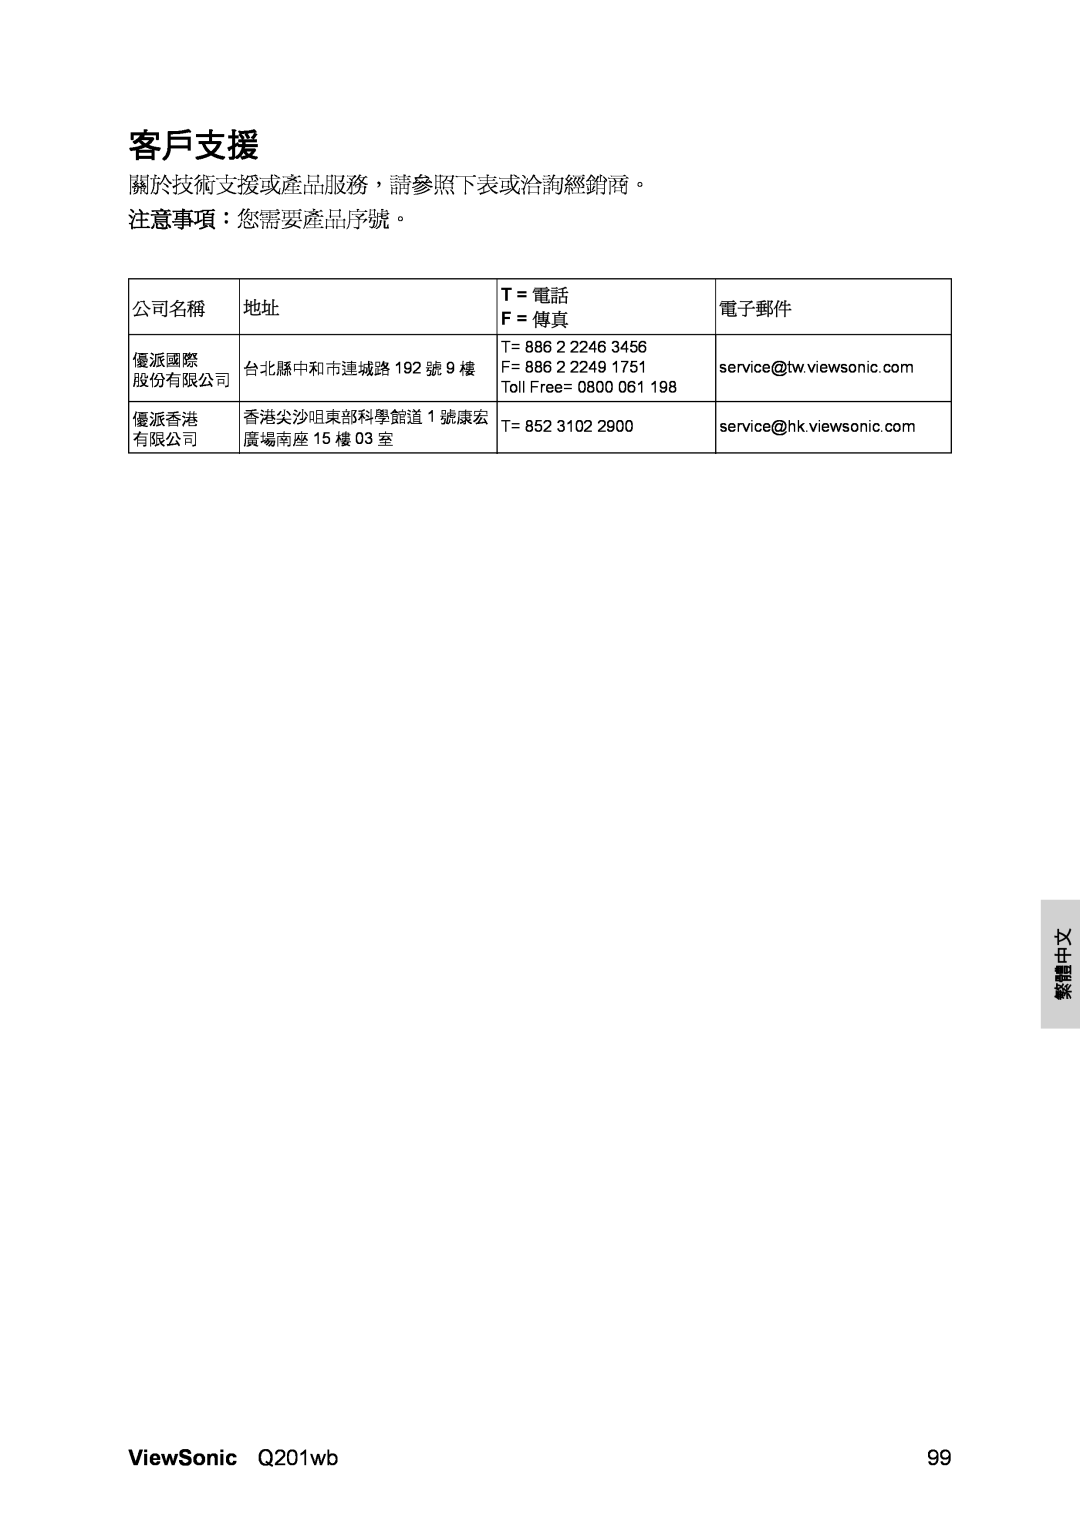 Optiquest VS12106 manual 客戶支援, 公司名稱, T = 電話, 電子郵件, F = 傳真, 繁體中文 